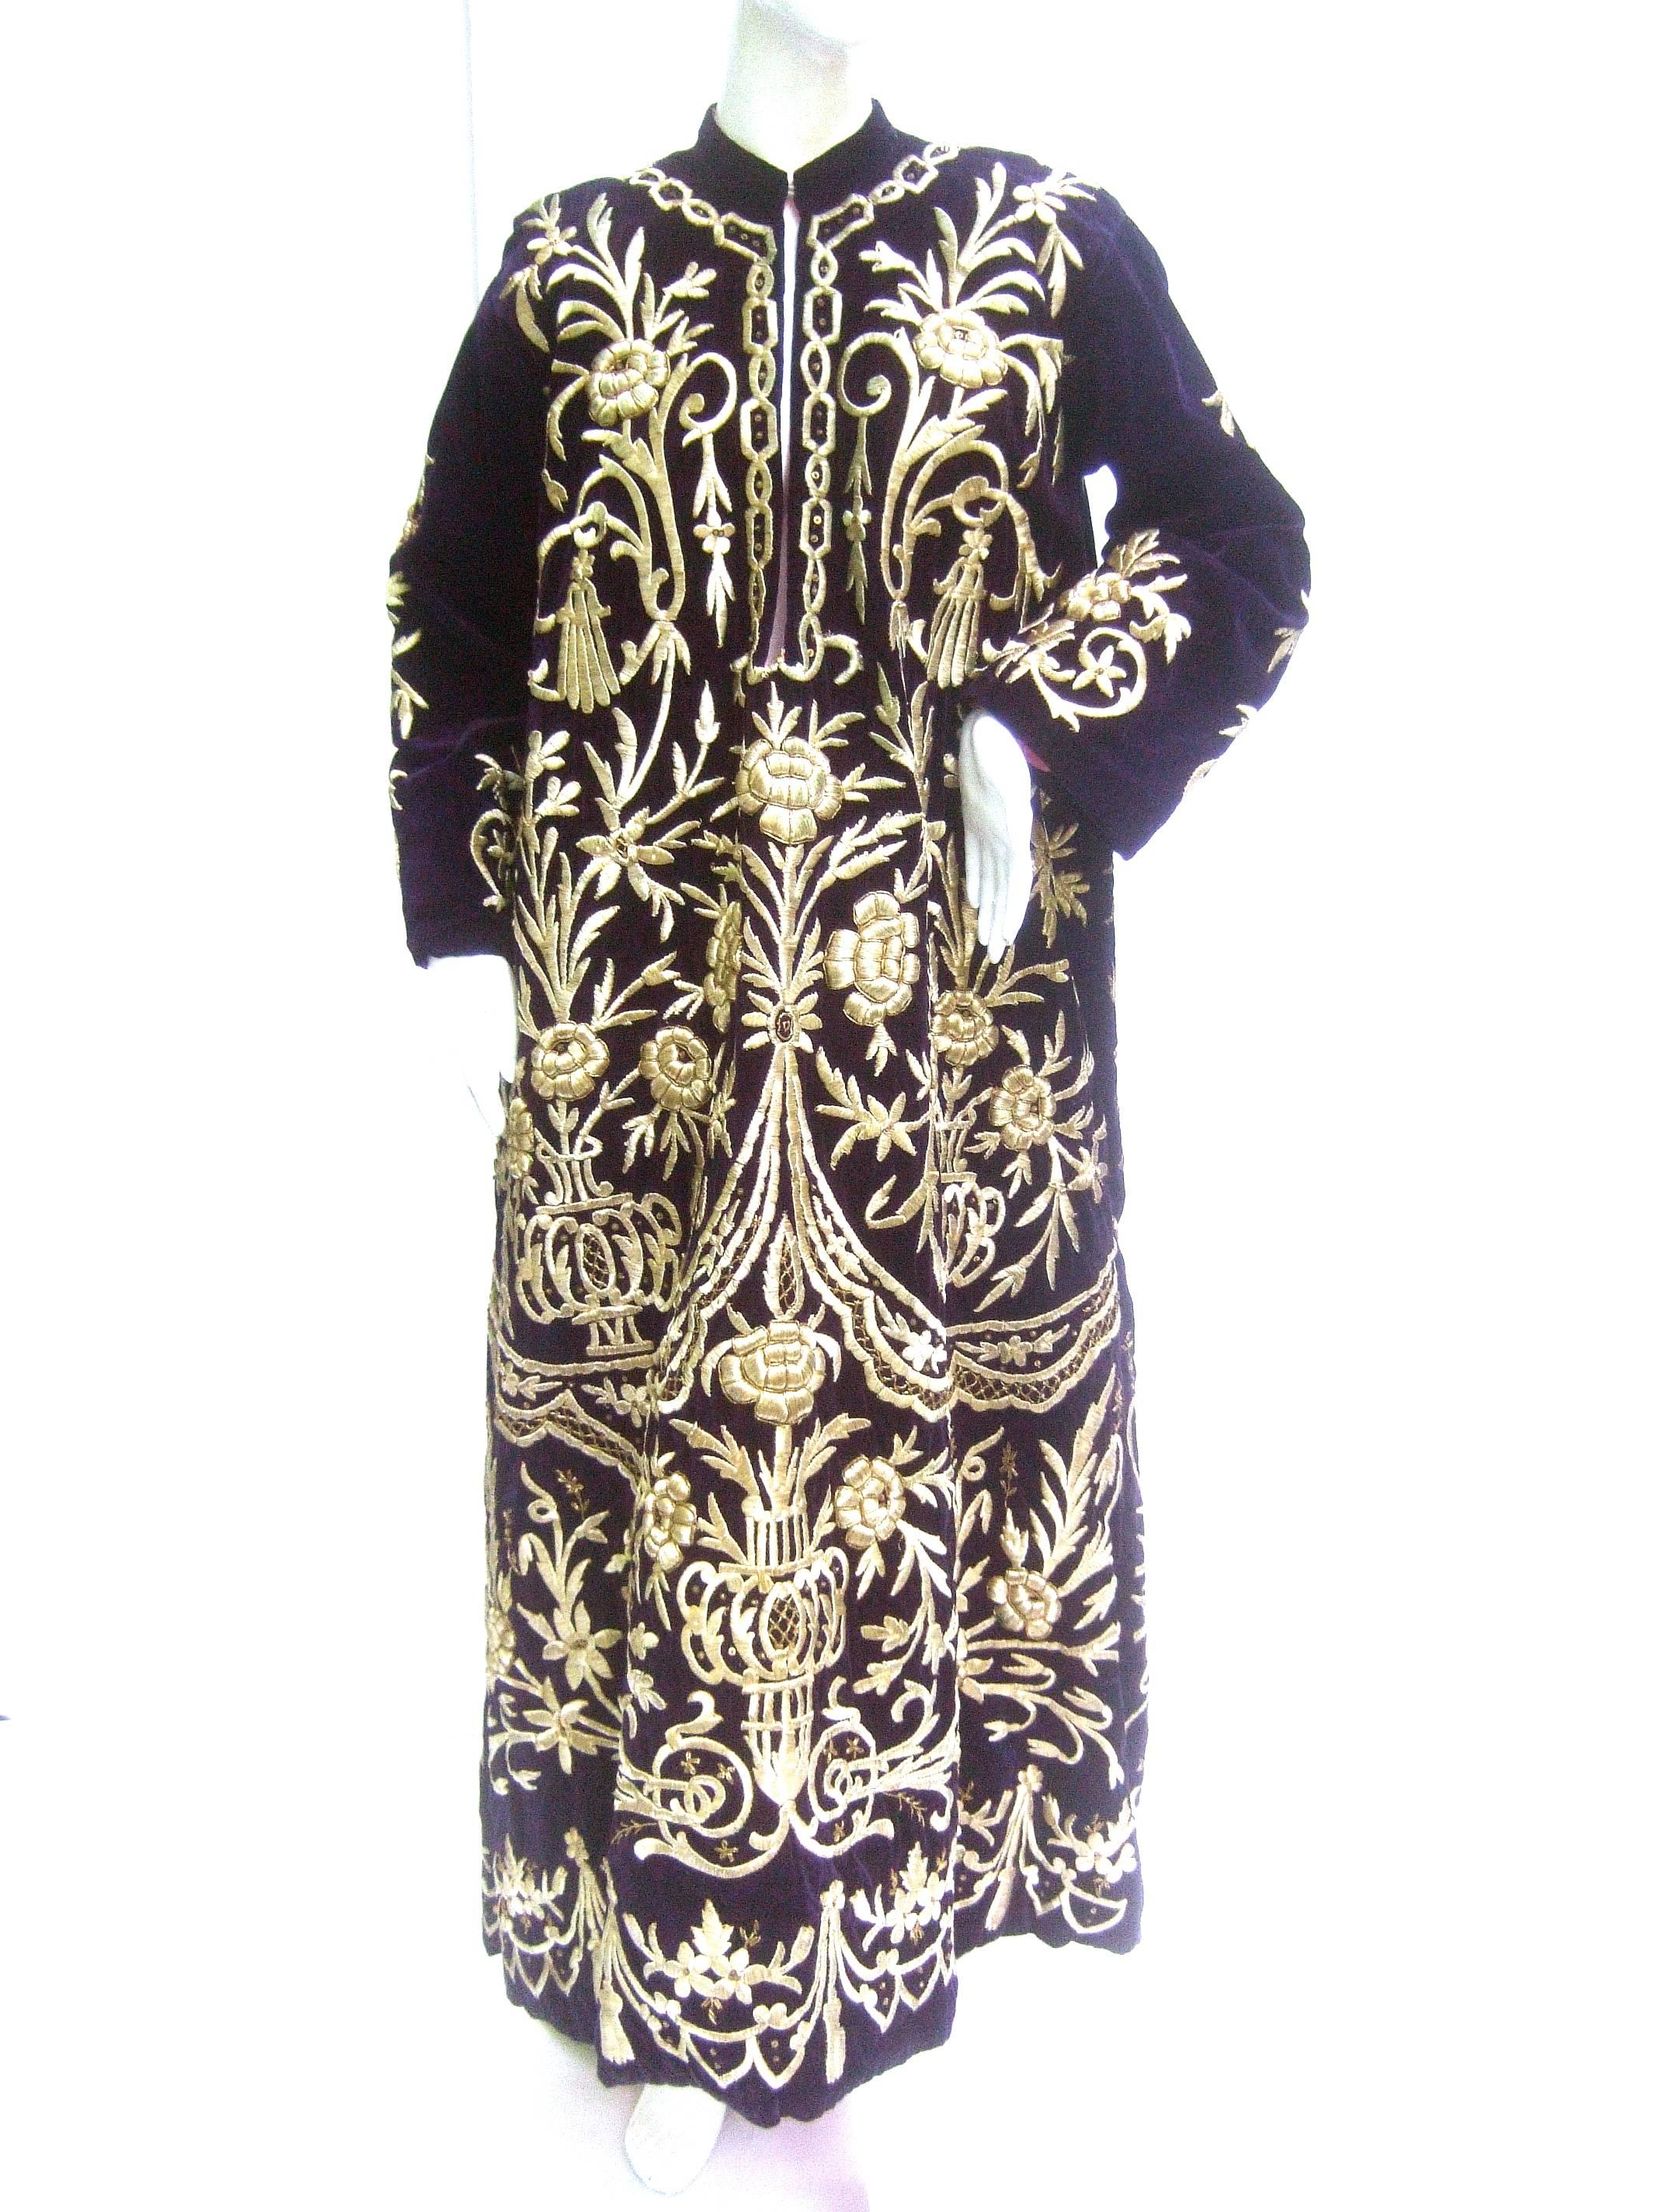 Exquisite Museum Worthy Aubergene Velvet Embroidered Metallic Caftan Robe 1